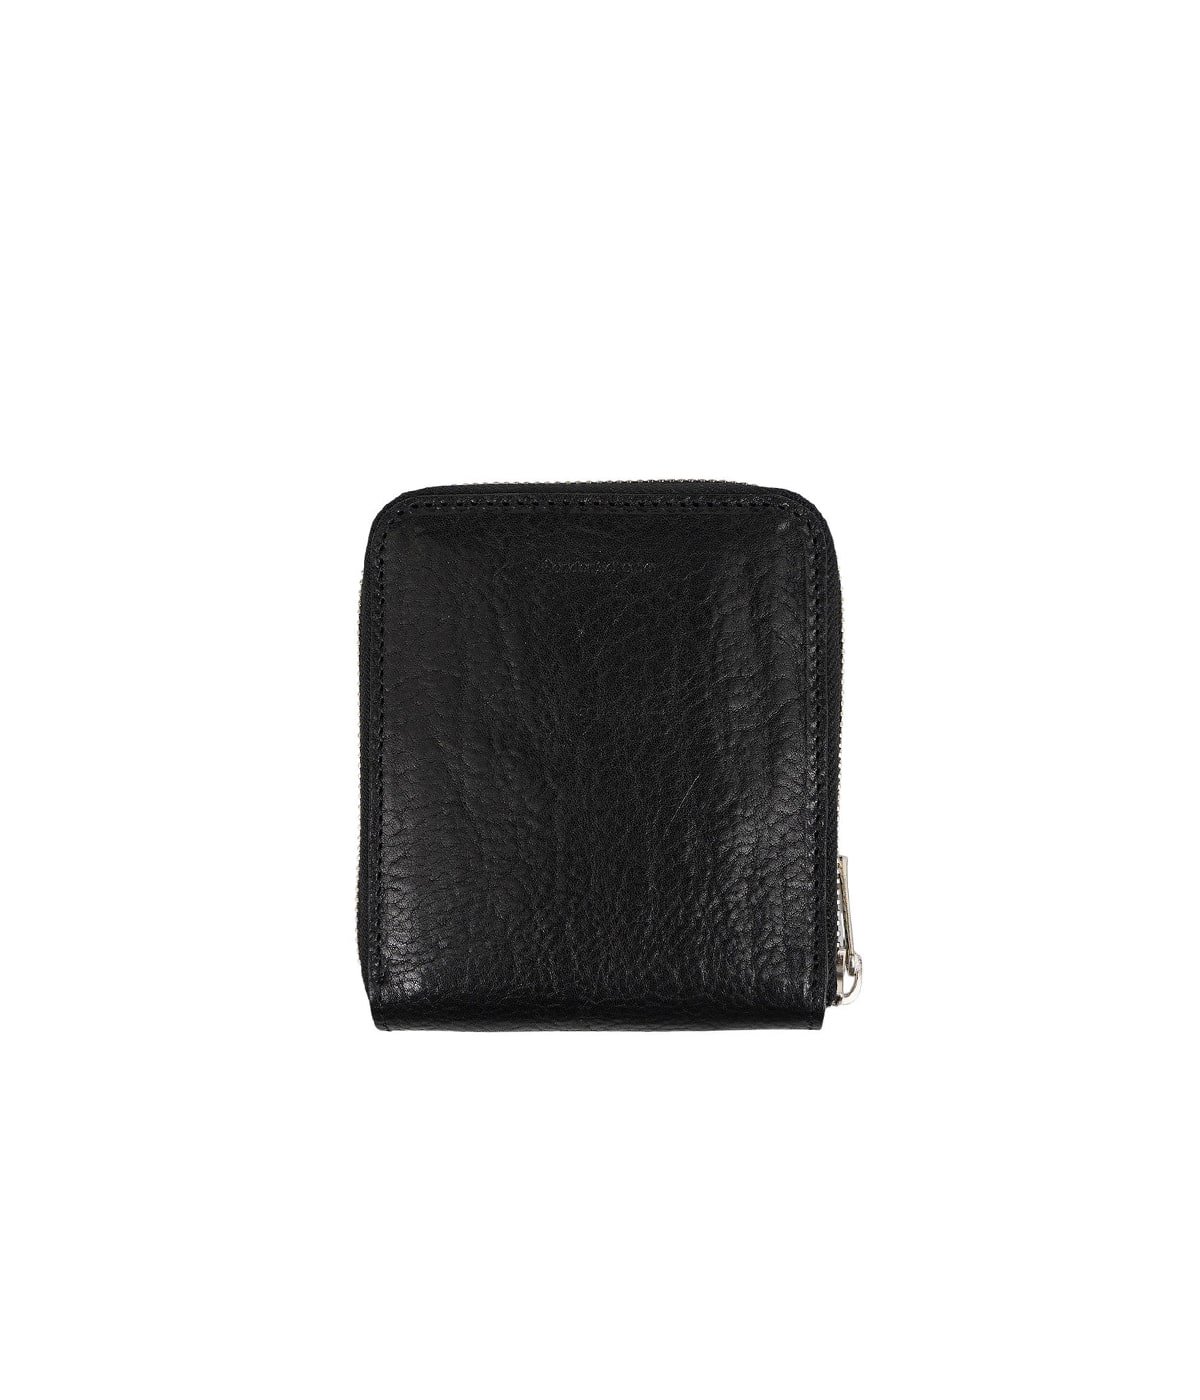 horizontal zip purse | Hender Scheme(エンダースキーマ) / ファッション雑貨 財布 (メンズ レディース